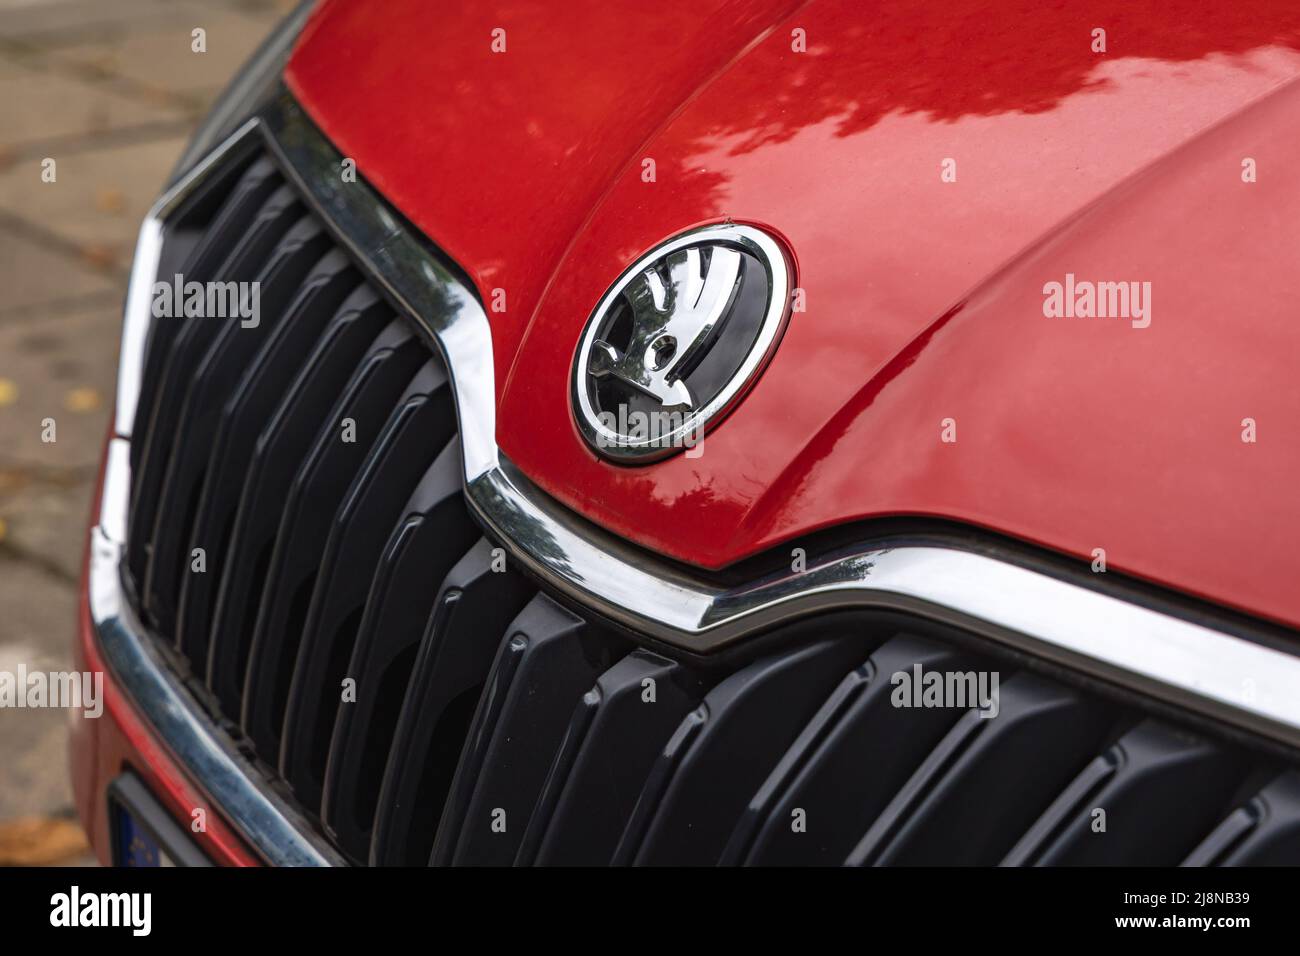 Skoda car emblem hi-res stock photography and images - Alamy